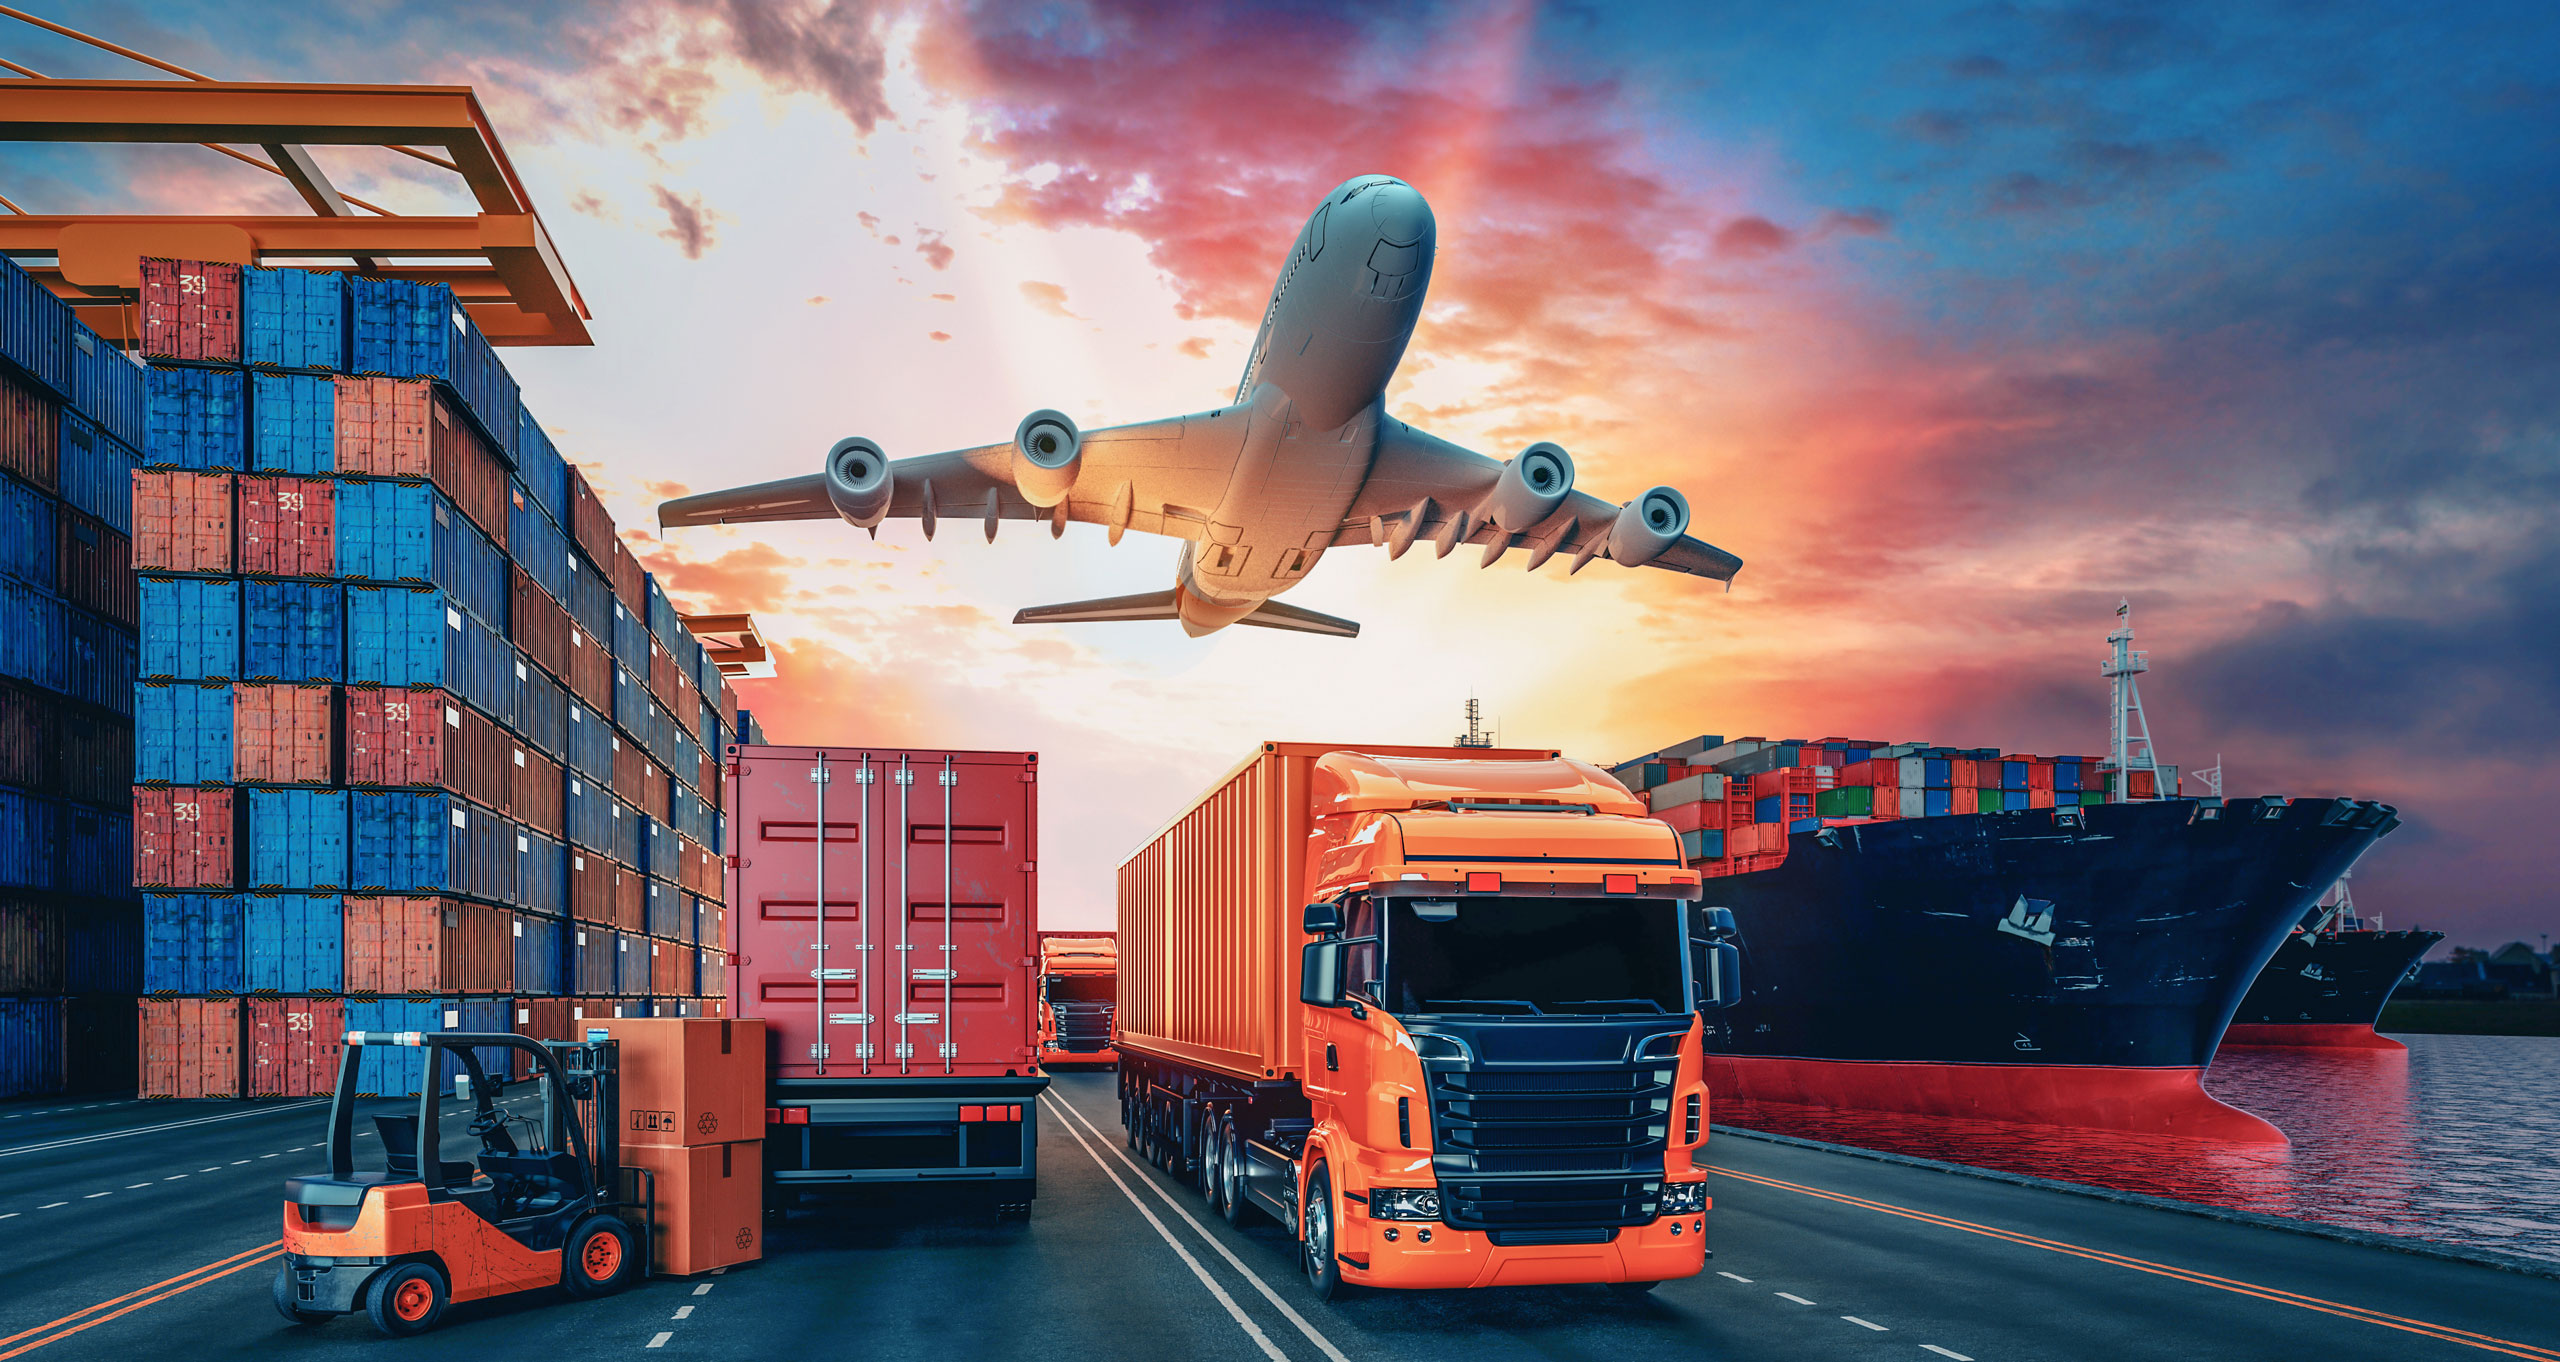 Transportation and Warehouse Environments